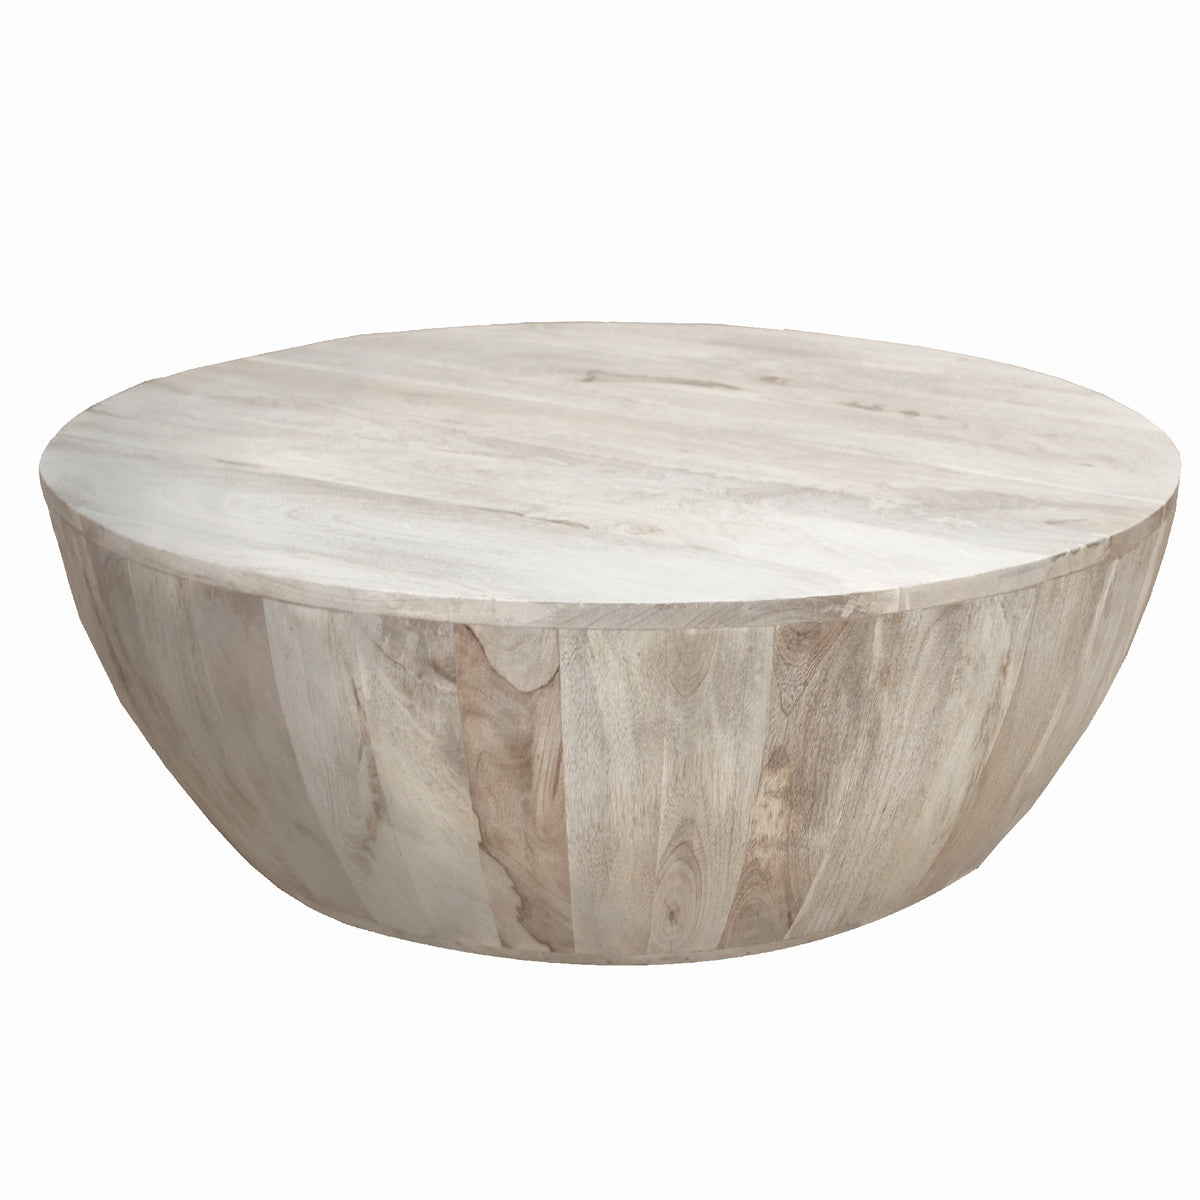 Arthur 12 Inch Round Mango Wood Coffee Table, Subtle Grains, Distressed White - UPT-32181